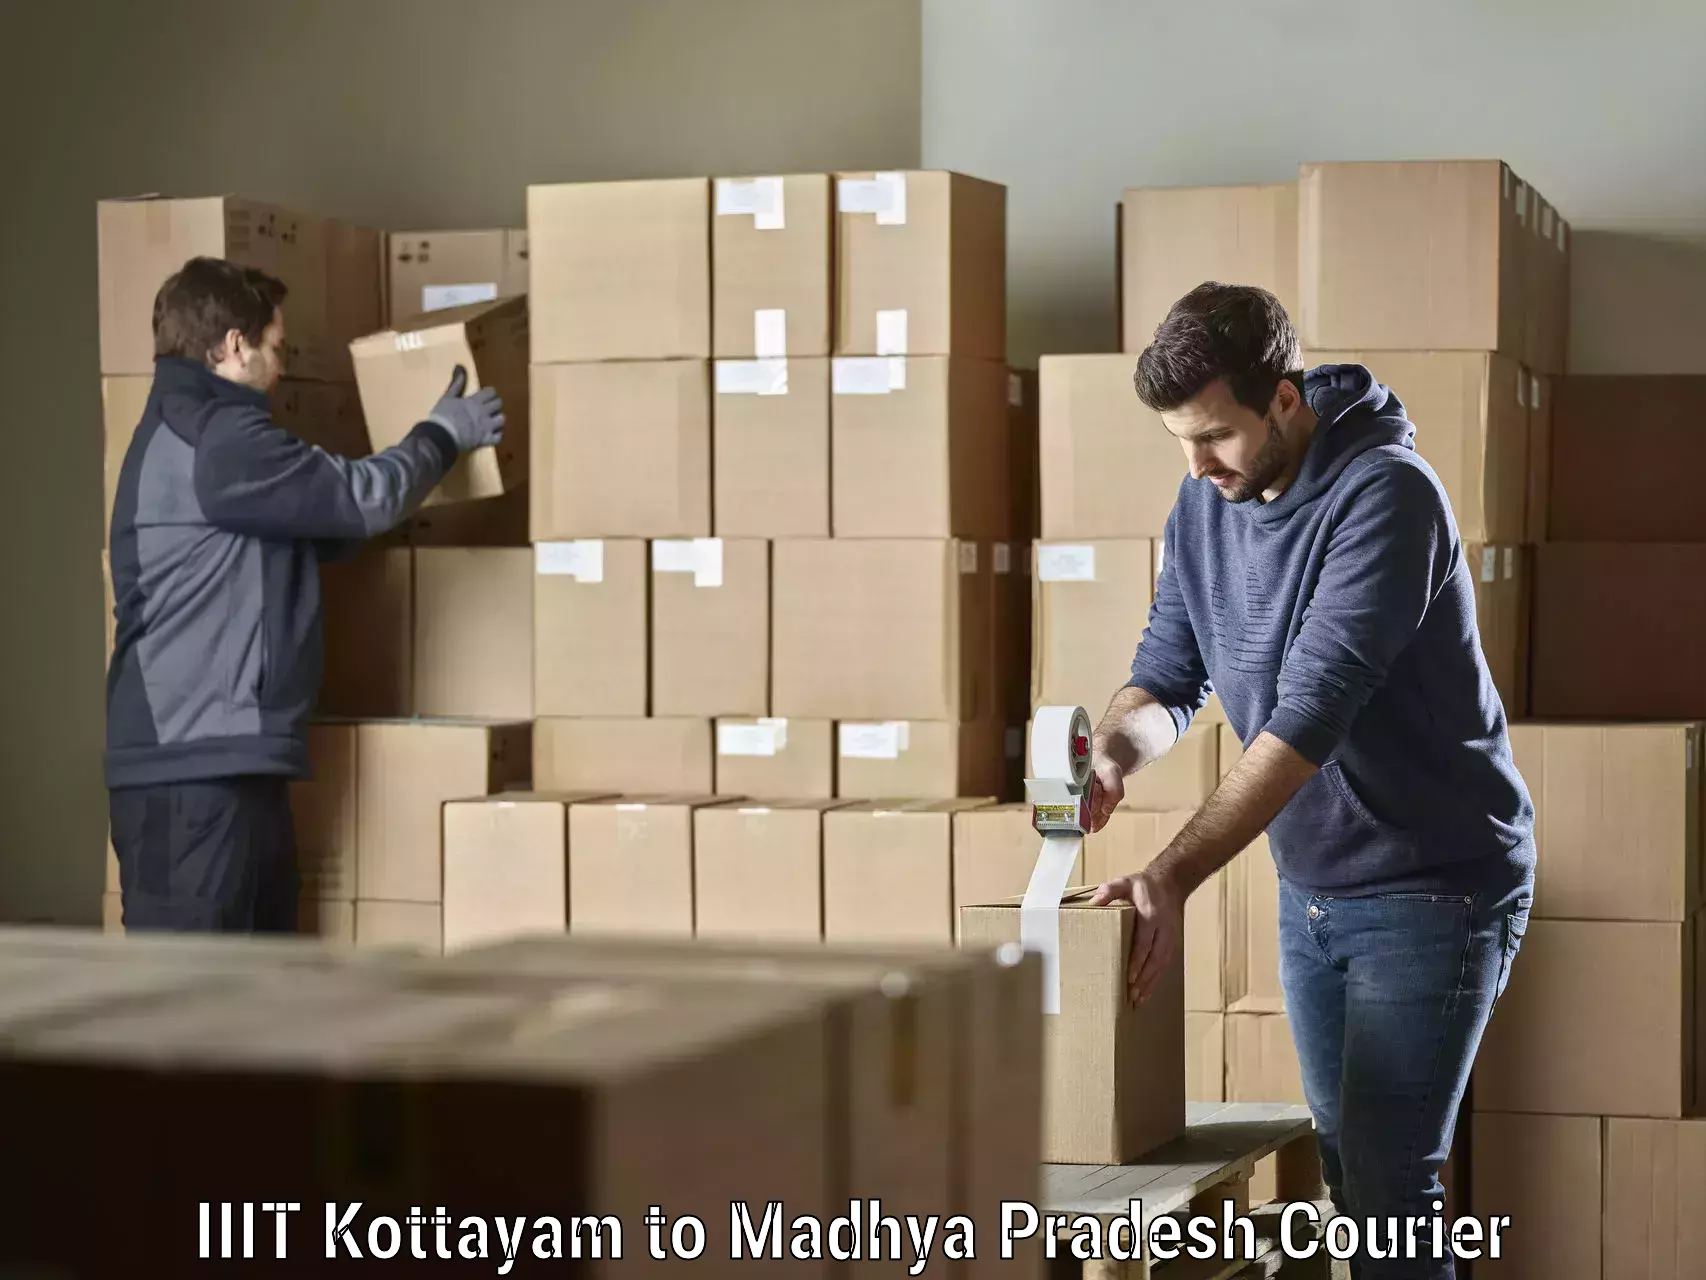 Courier service comparison IIIT Kottayam to Kukshi